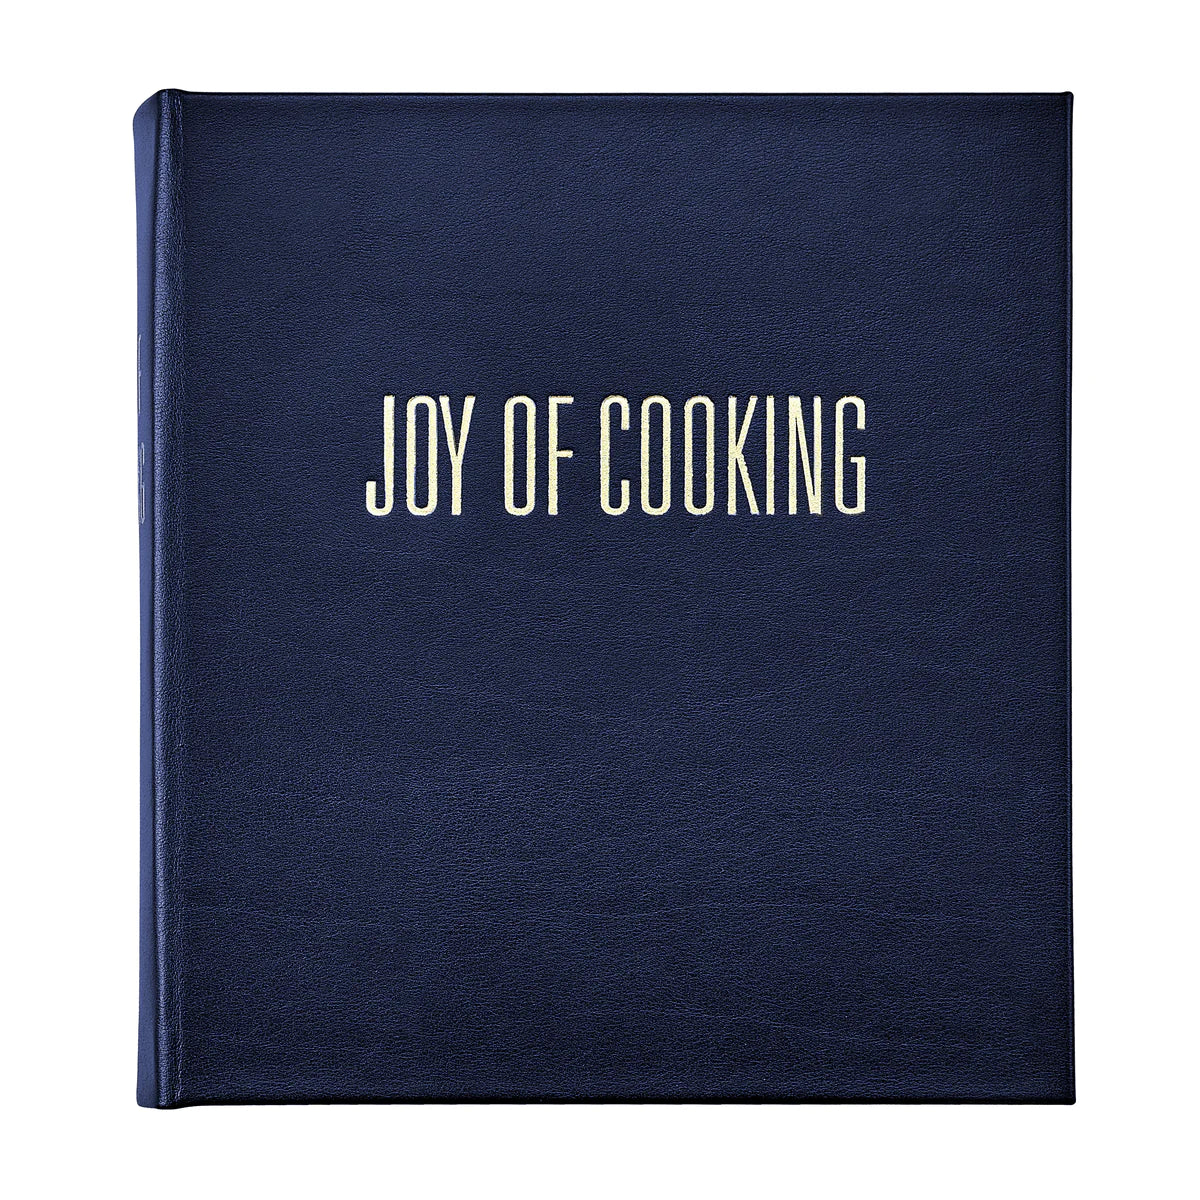 JOY OF COOKING BOOK